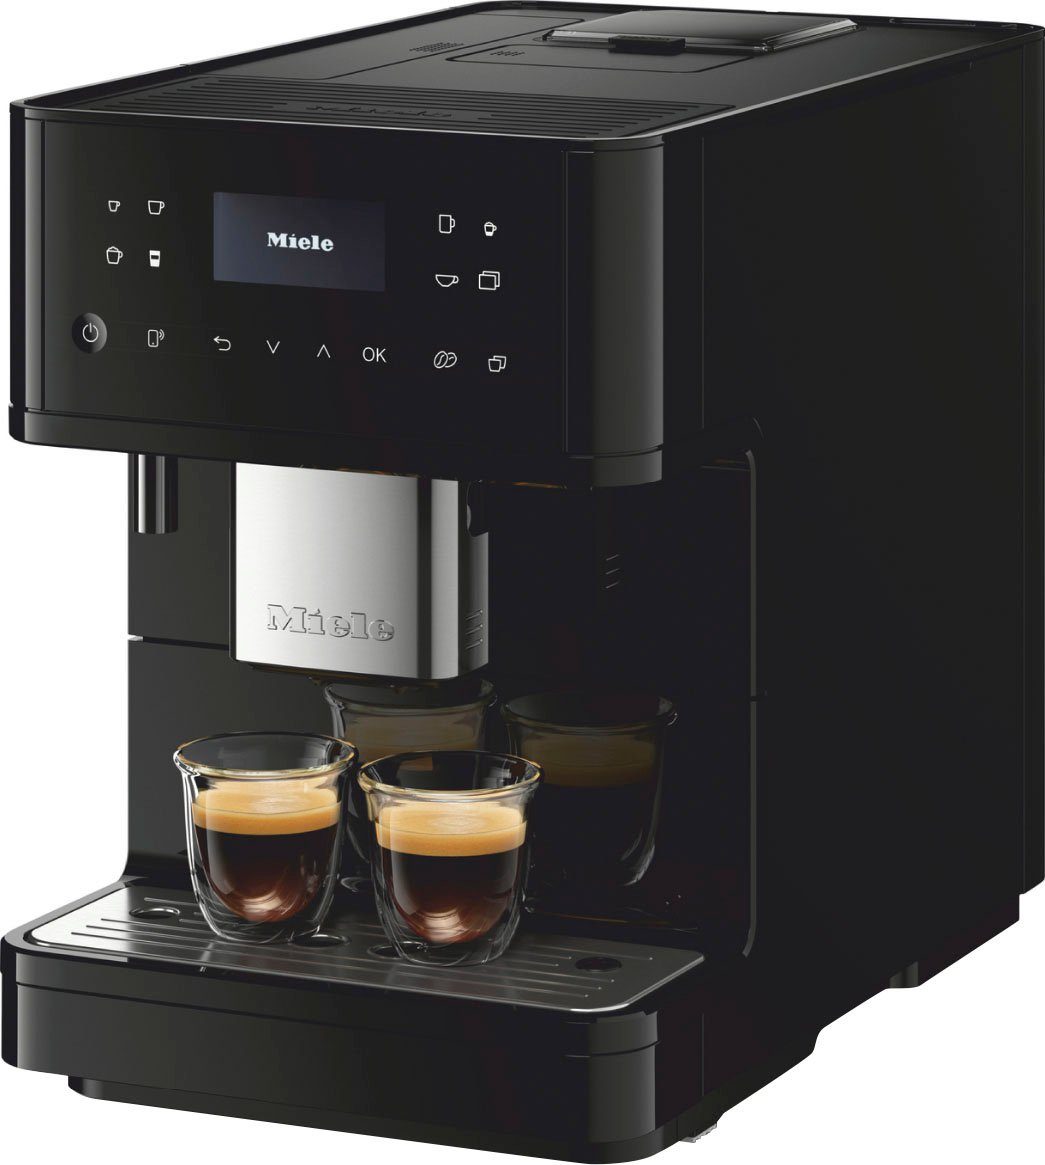 Miele MilkPerfection, Kaffeekannenfunktion CM Kaffeevollautomat Genießerprofile, 6160